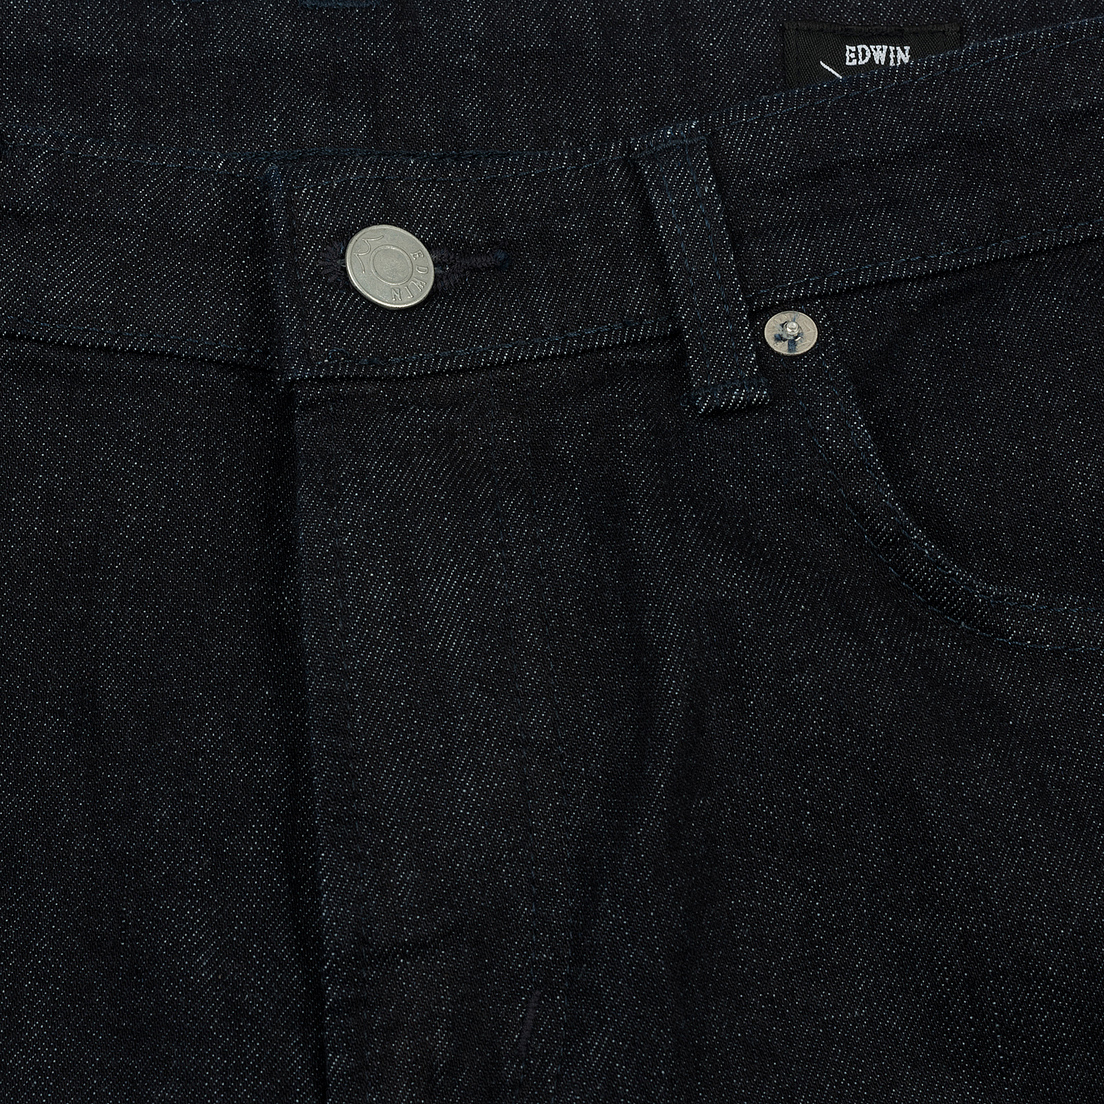 Edwin Мужские джинсы Modern Regular Tapered Blue Japanese Stretch Denim 11.5 Oz